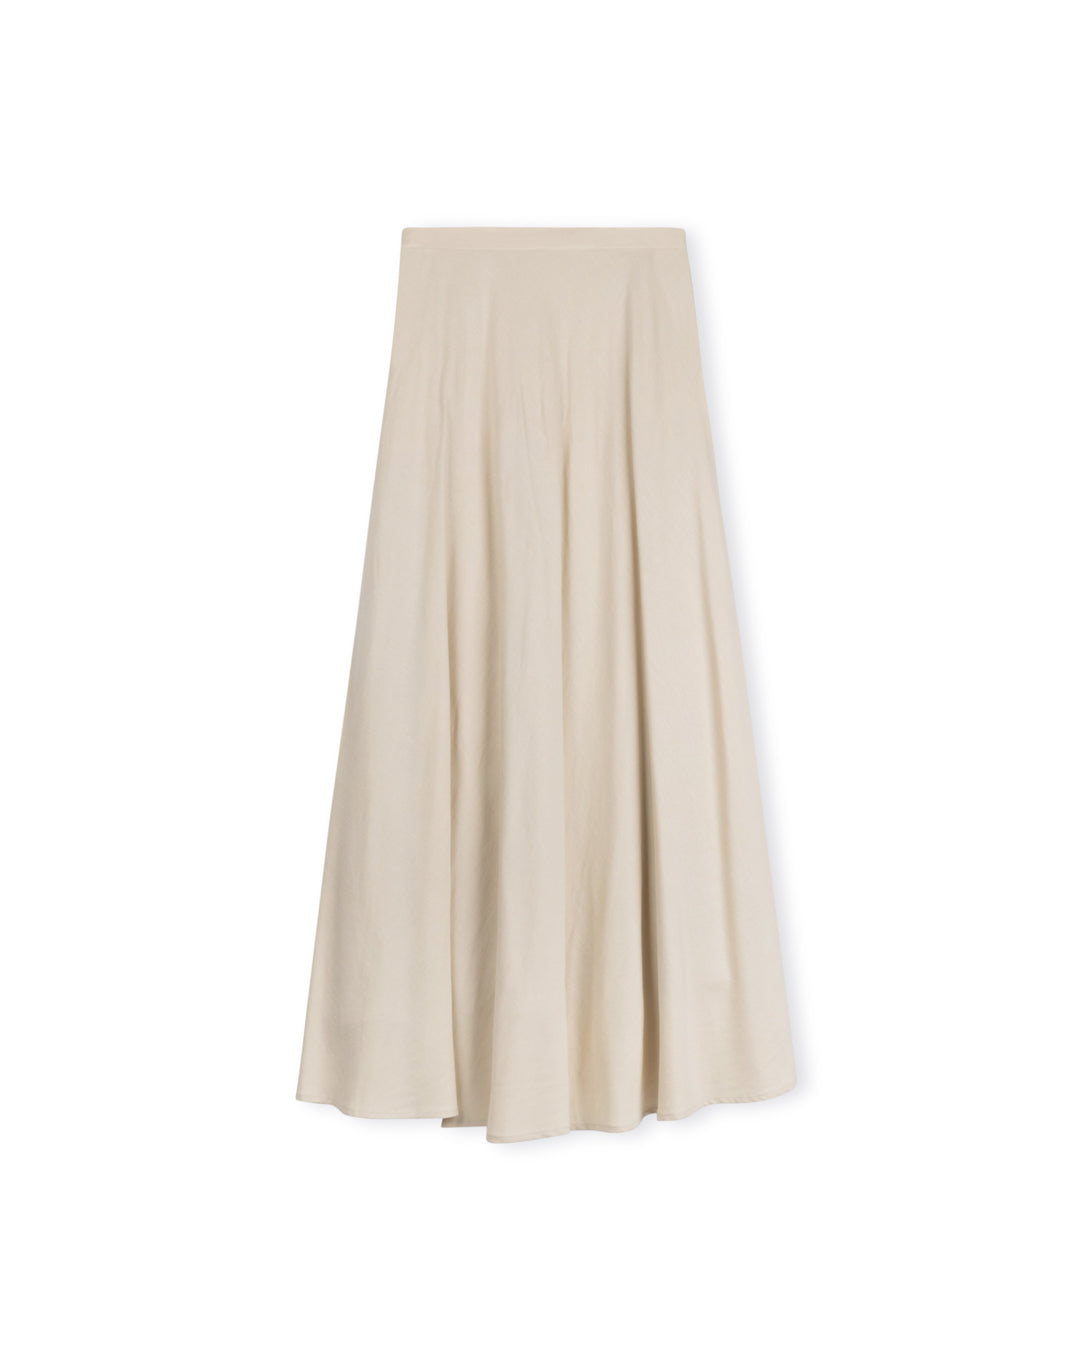 Textured Maxi Slip Skirt